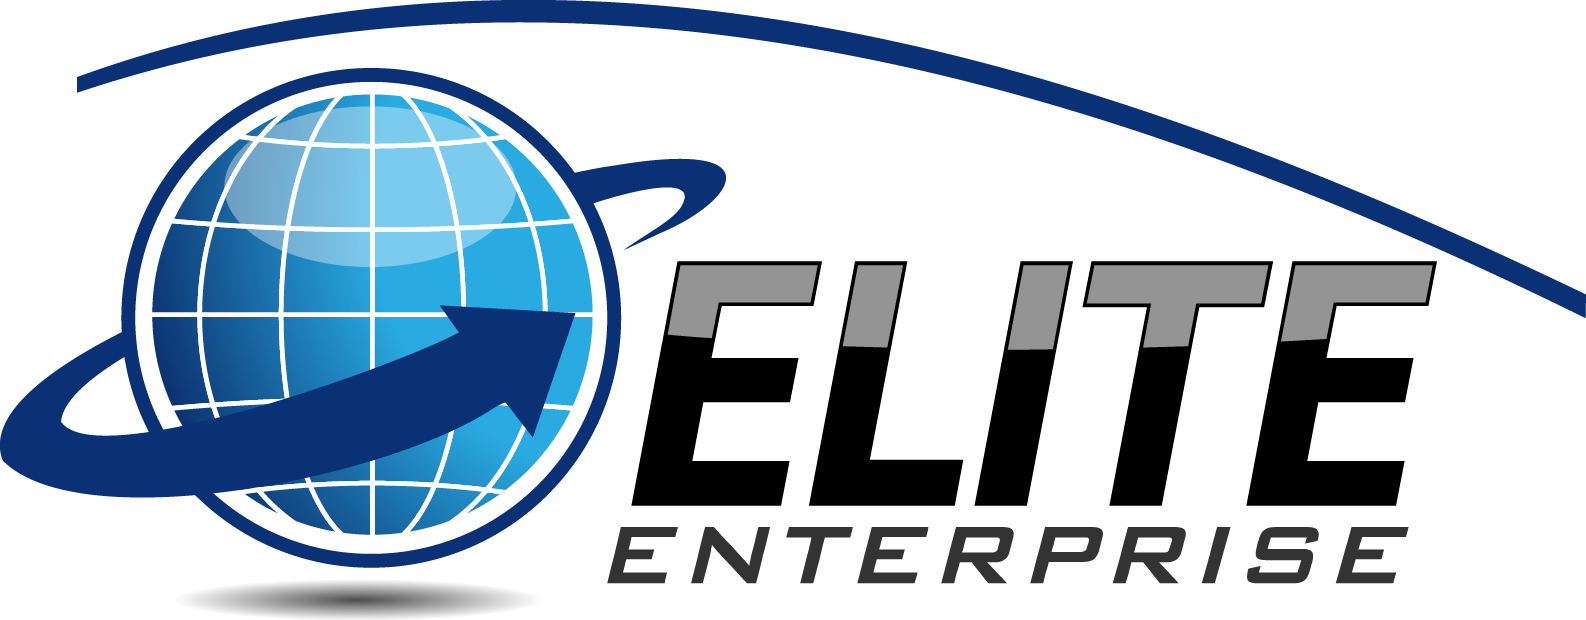 Elite Enterprise